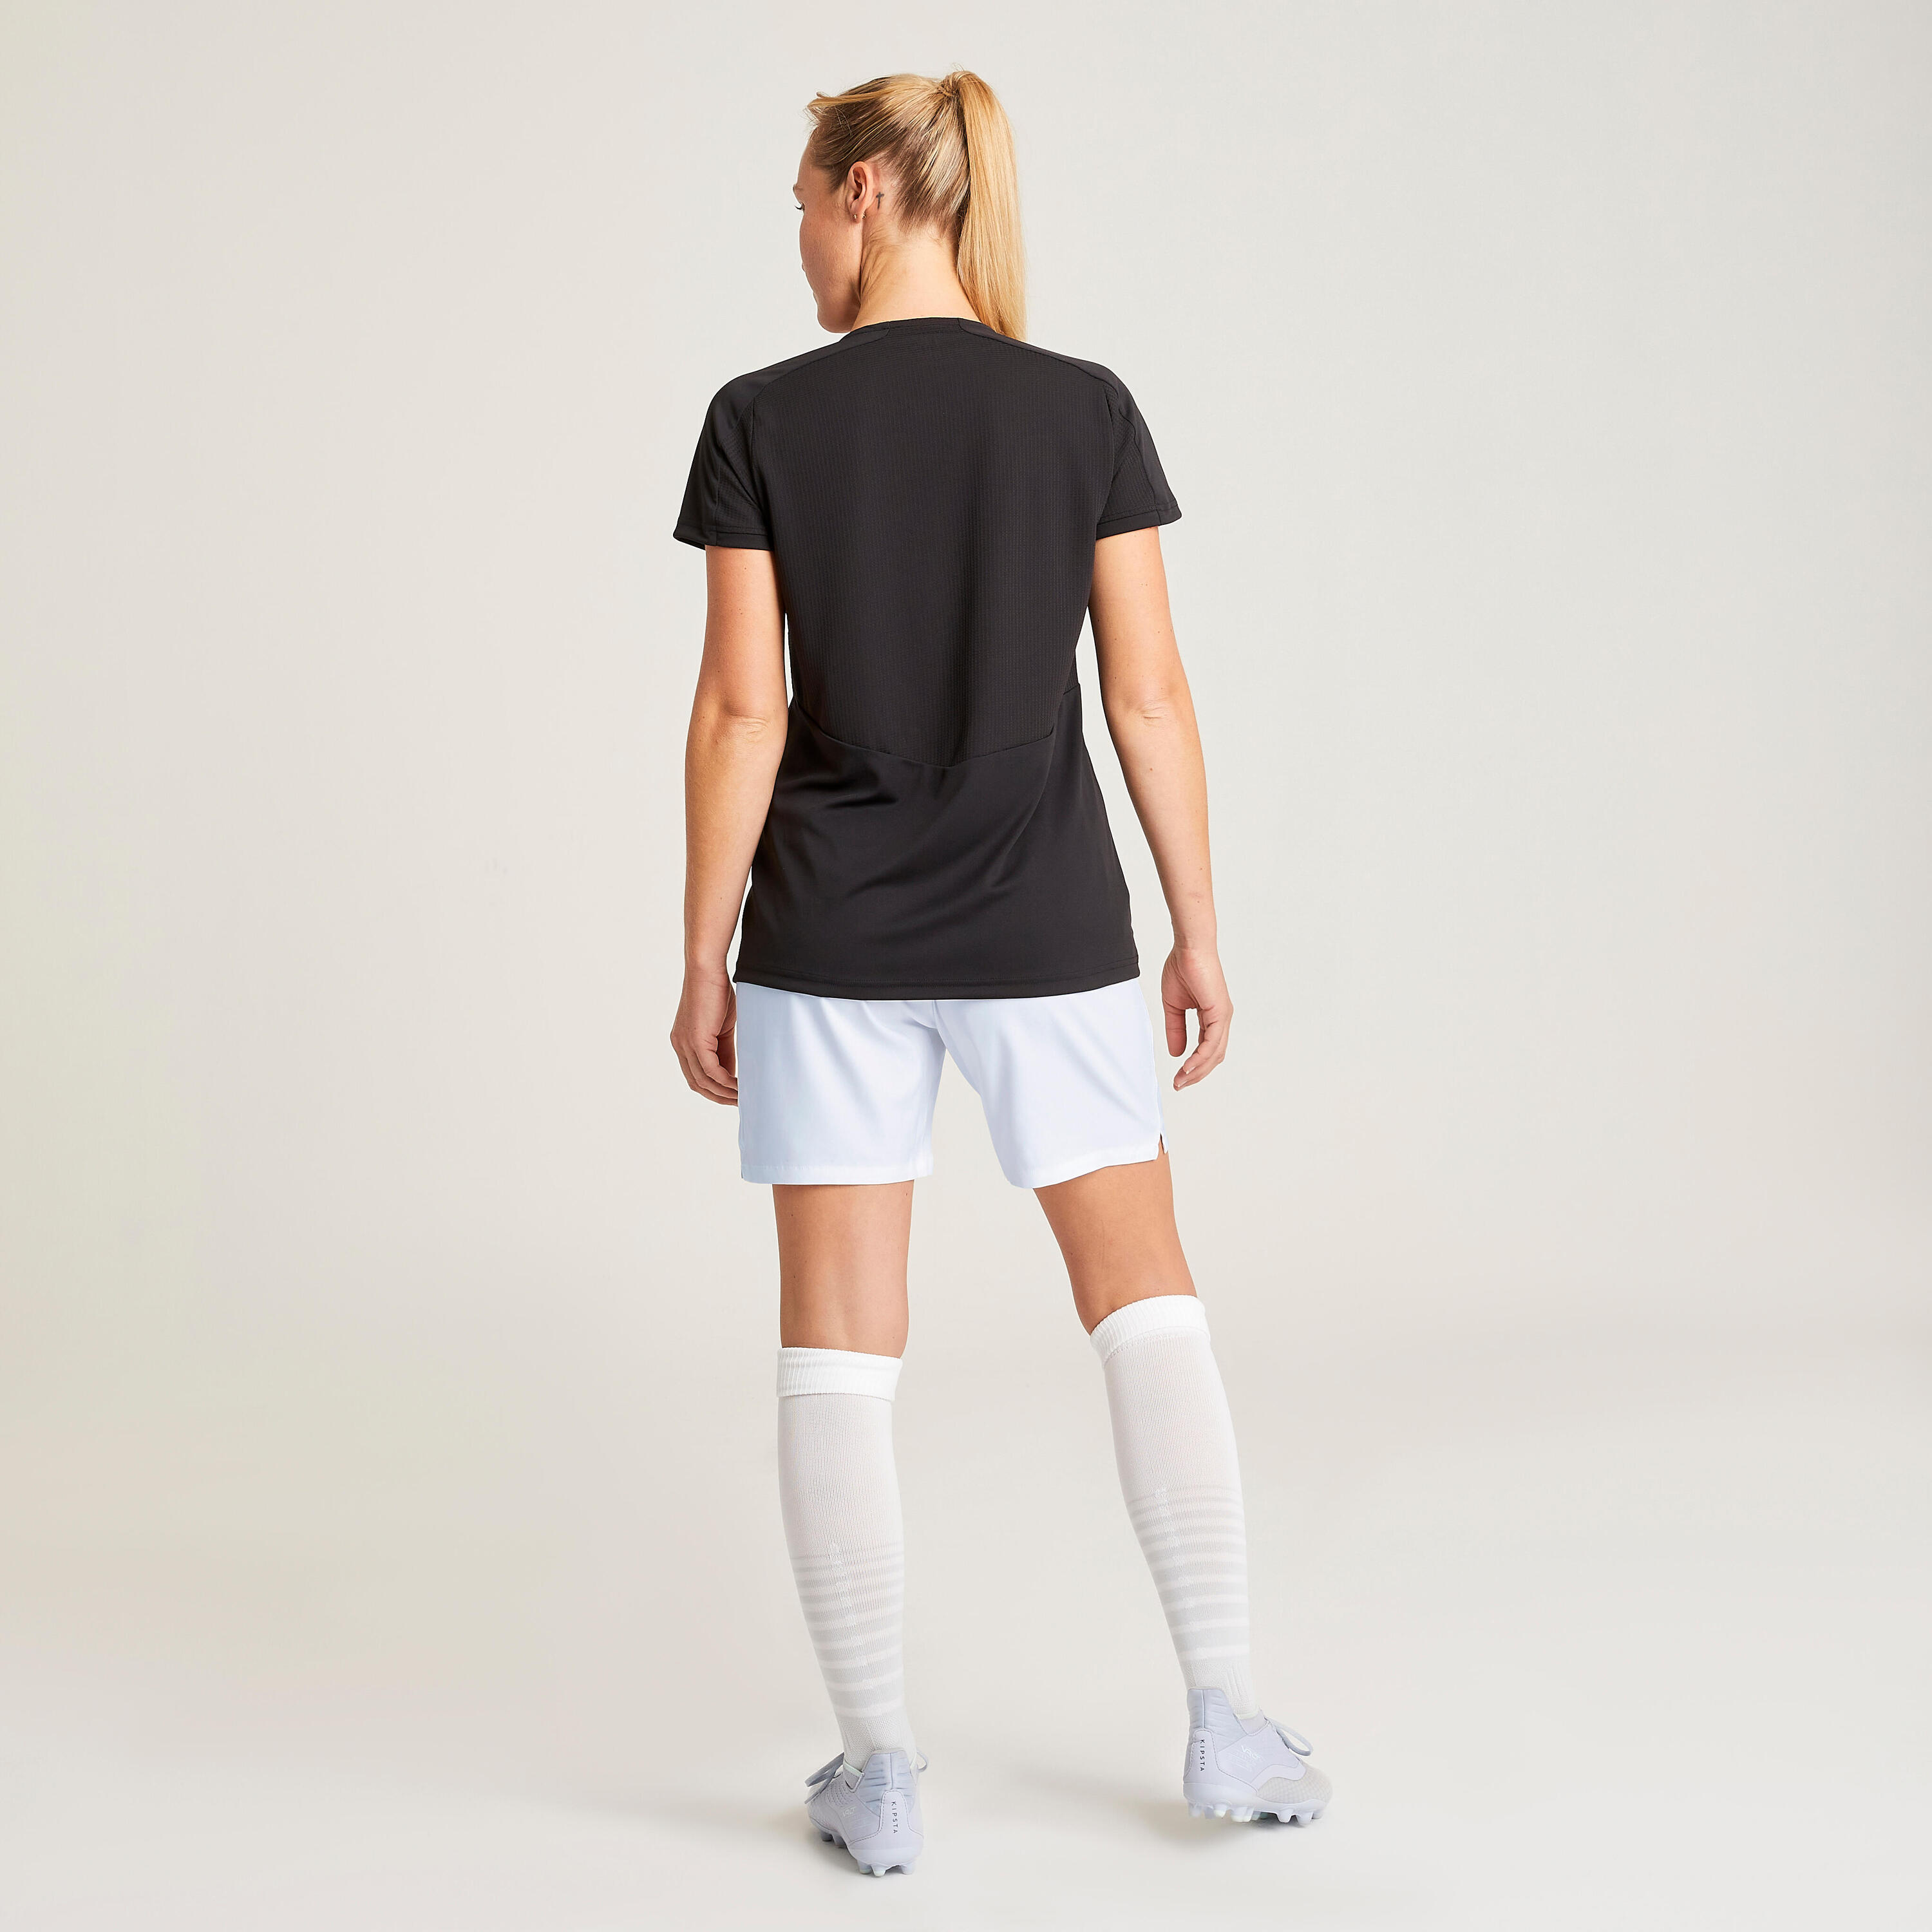 Women's Plain Football Shirt - Black 9/29